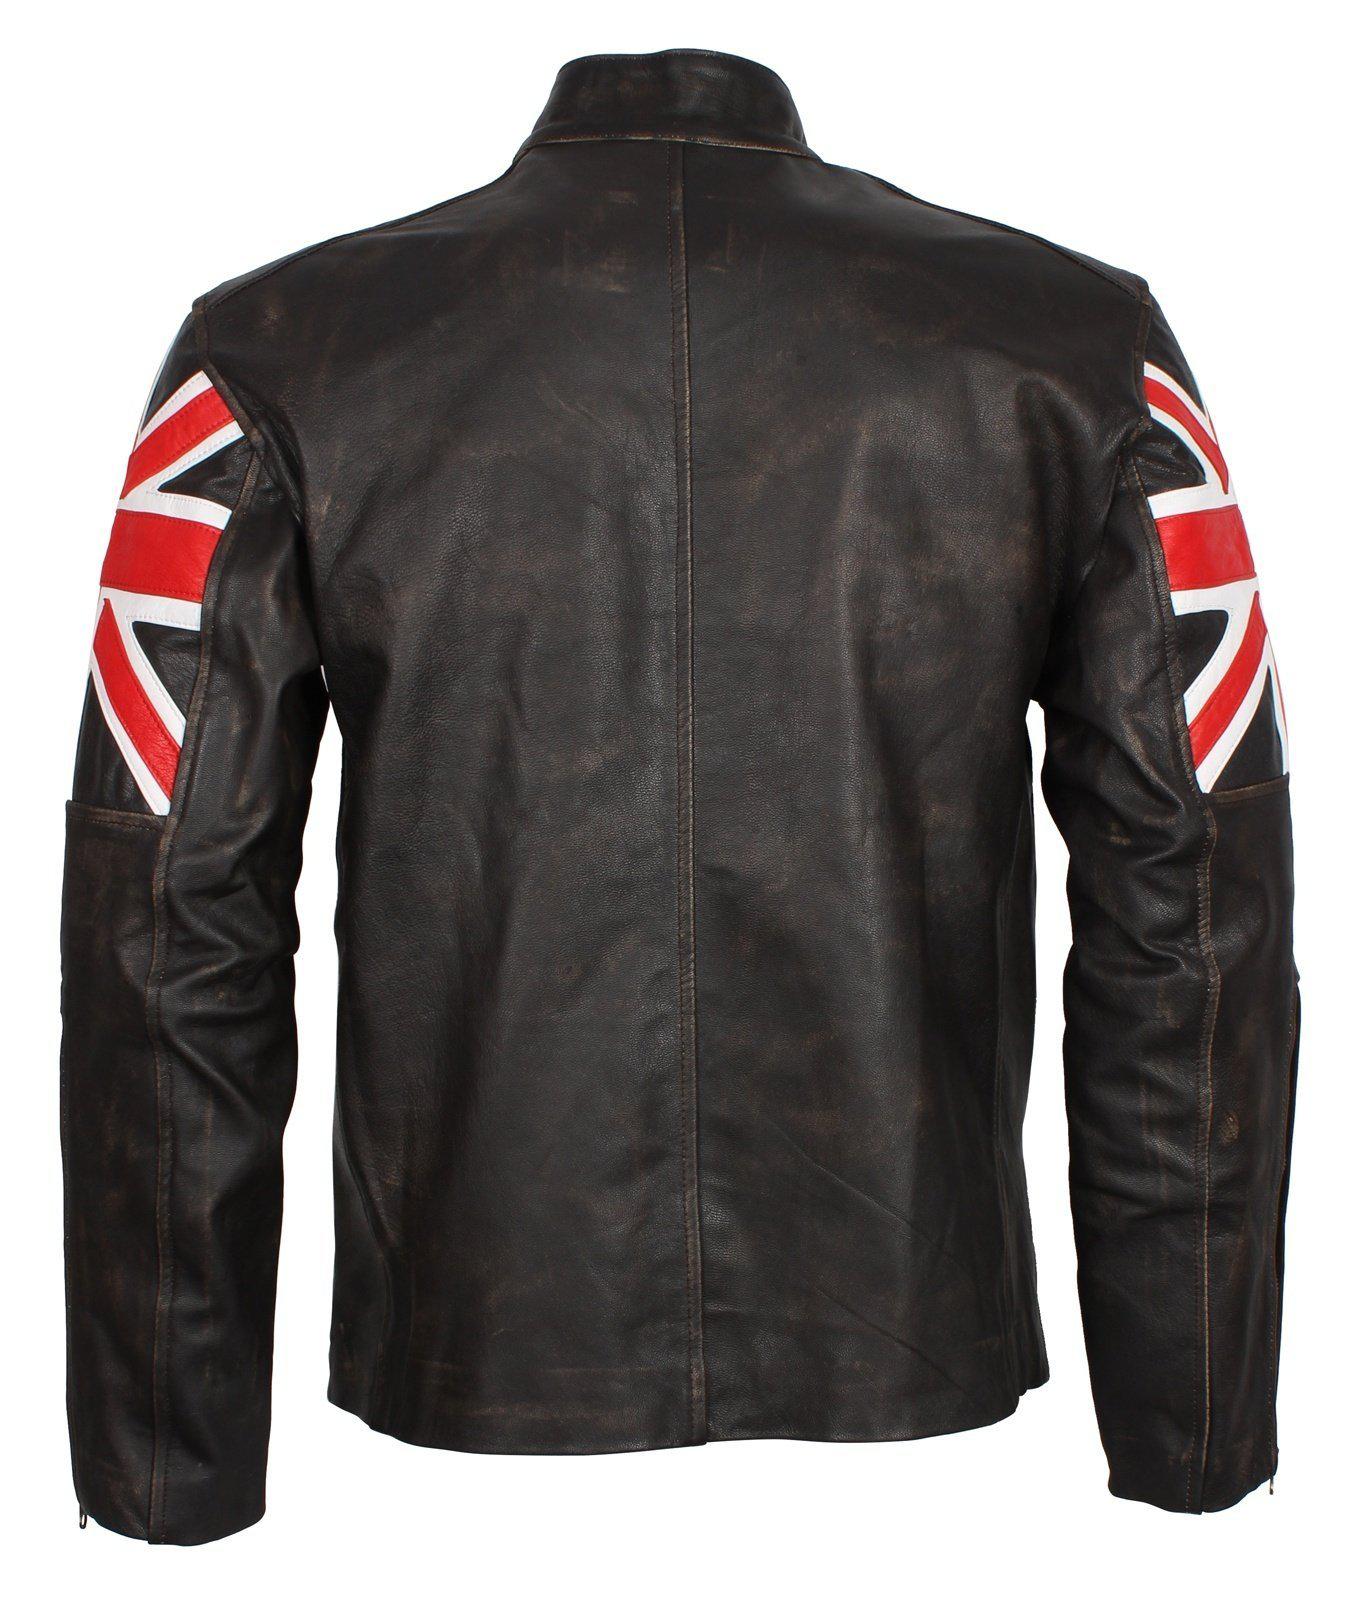 Union Jack British Flag Jacket in Distressed Leather – Alex Gear